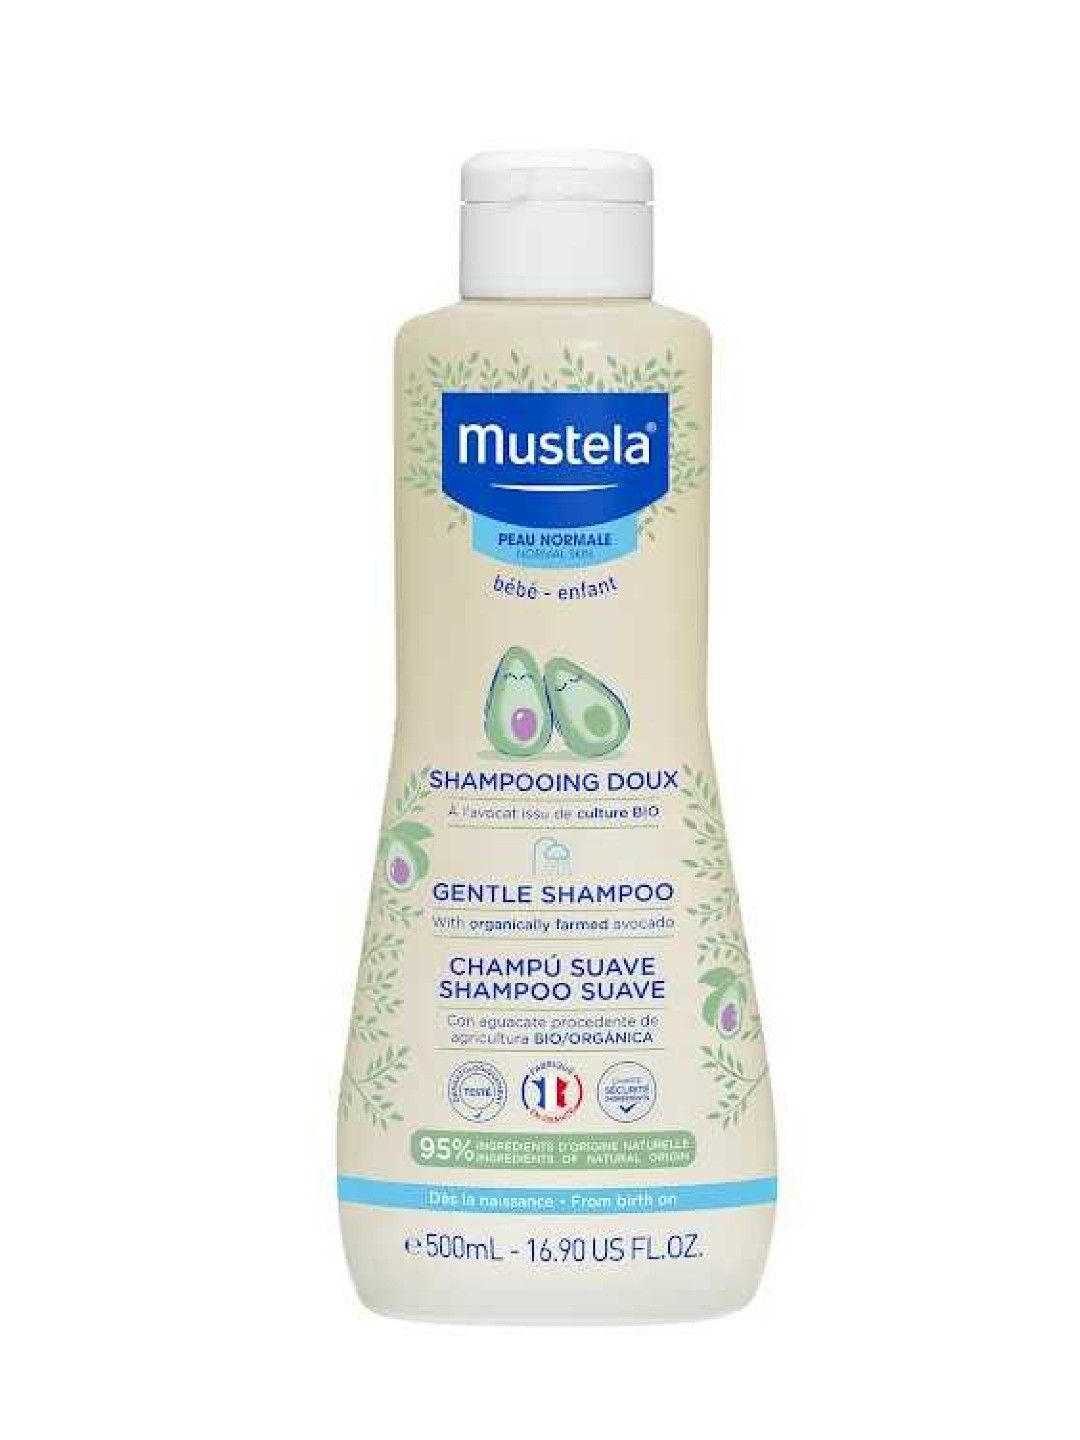 Mustela Gentle Shampoo (500ml)